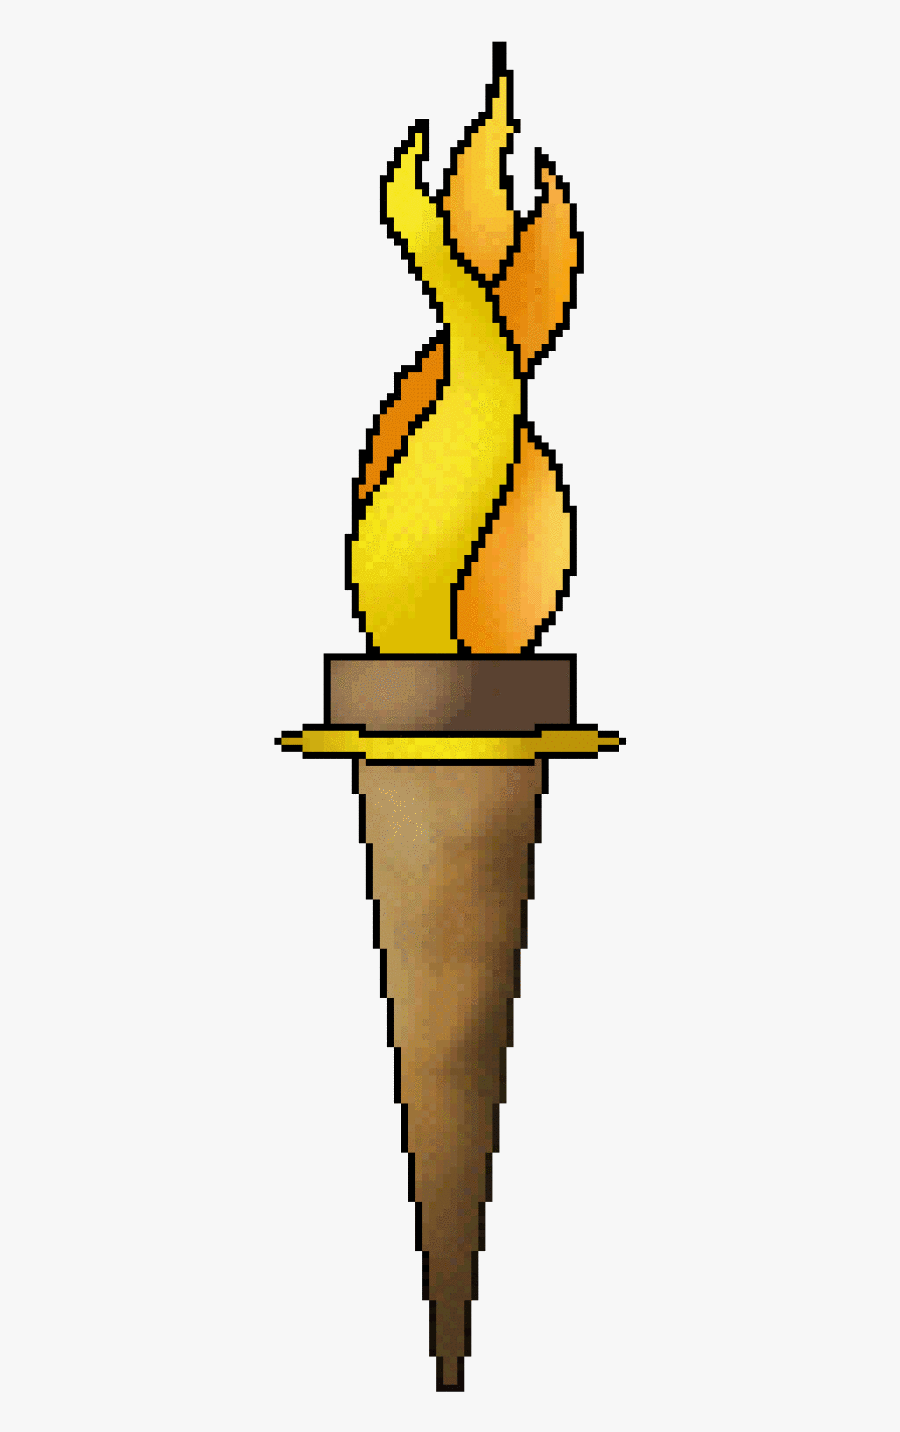 Transparent Condom Clipart - Cartoon Olympic Torch Torch, Transparent Clipart